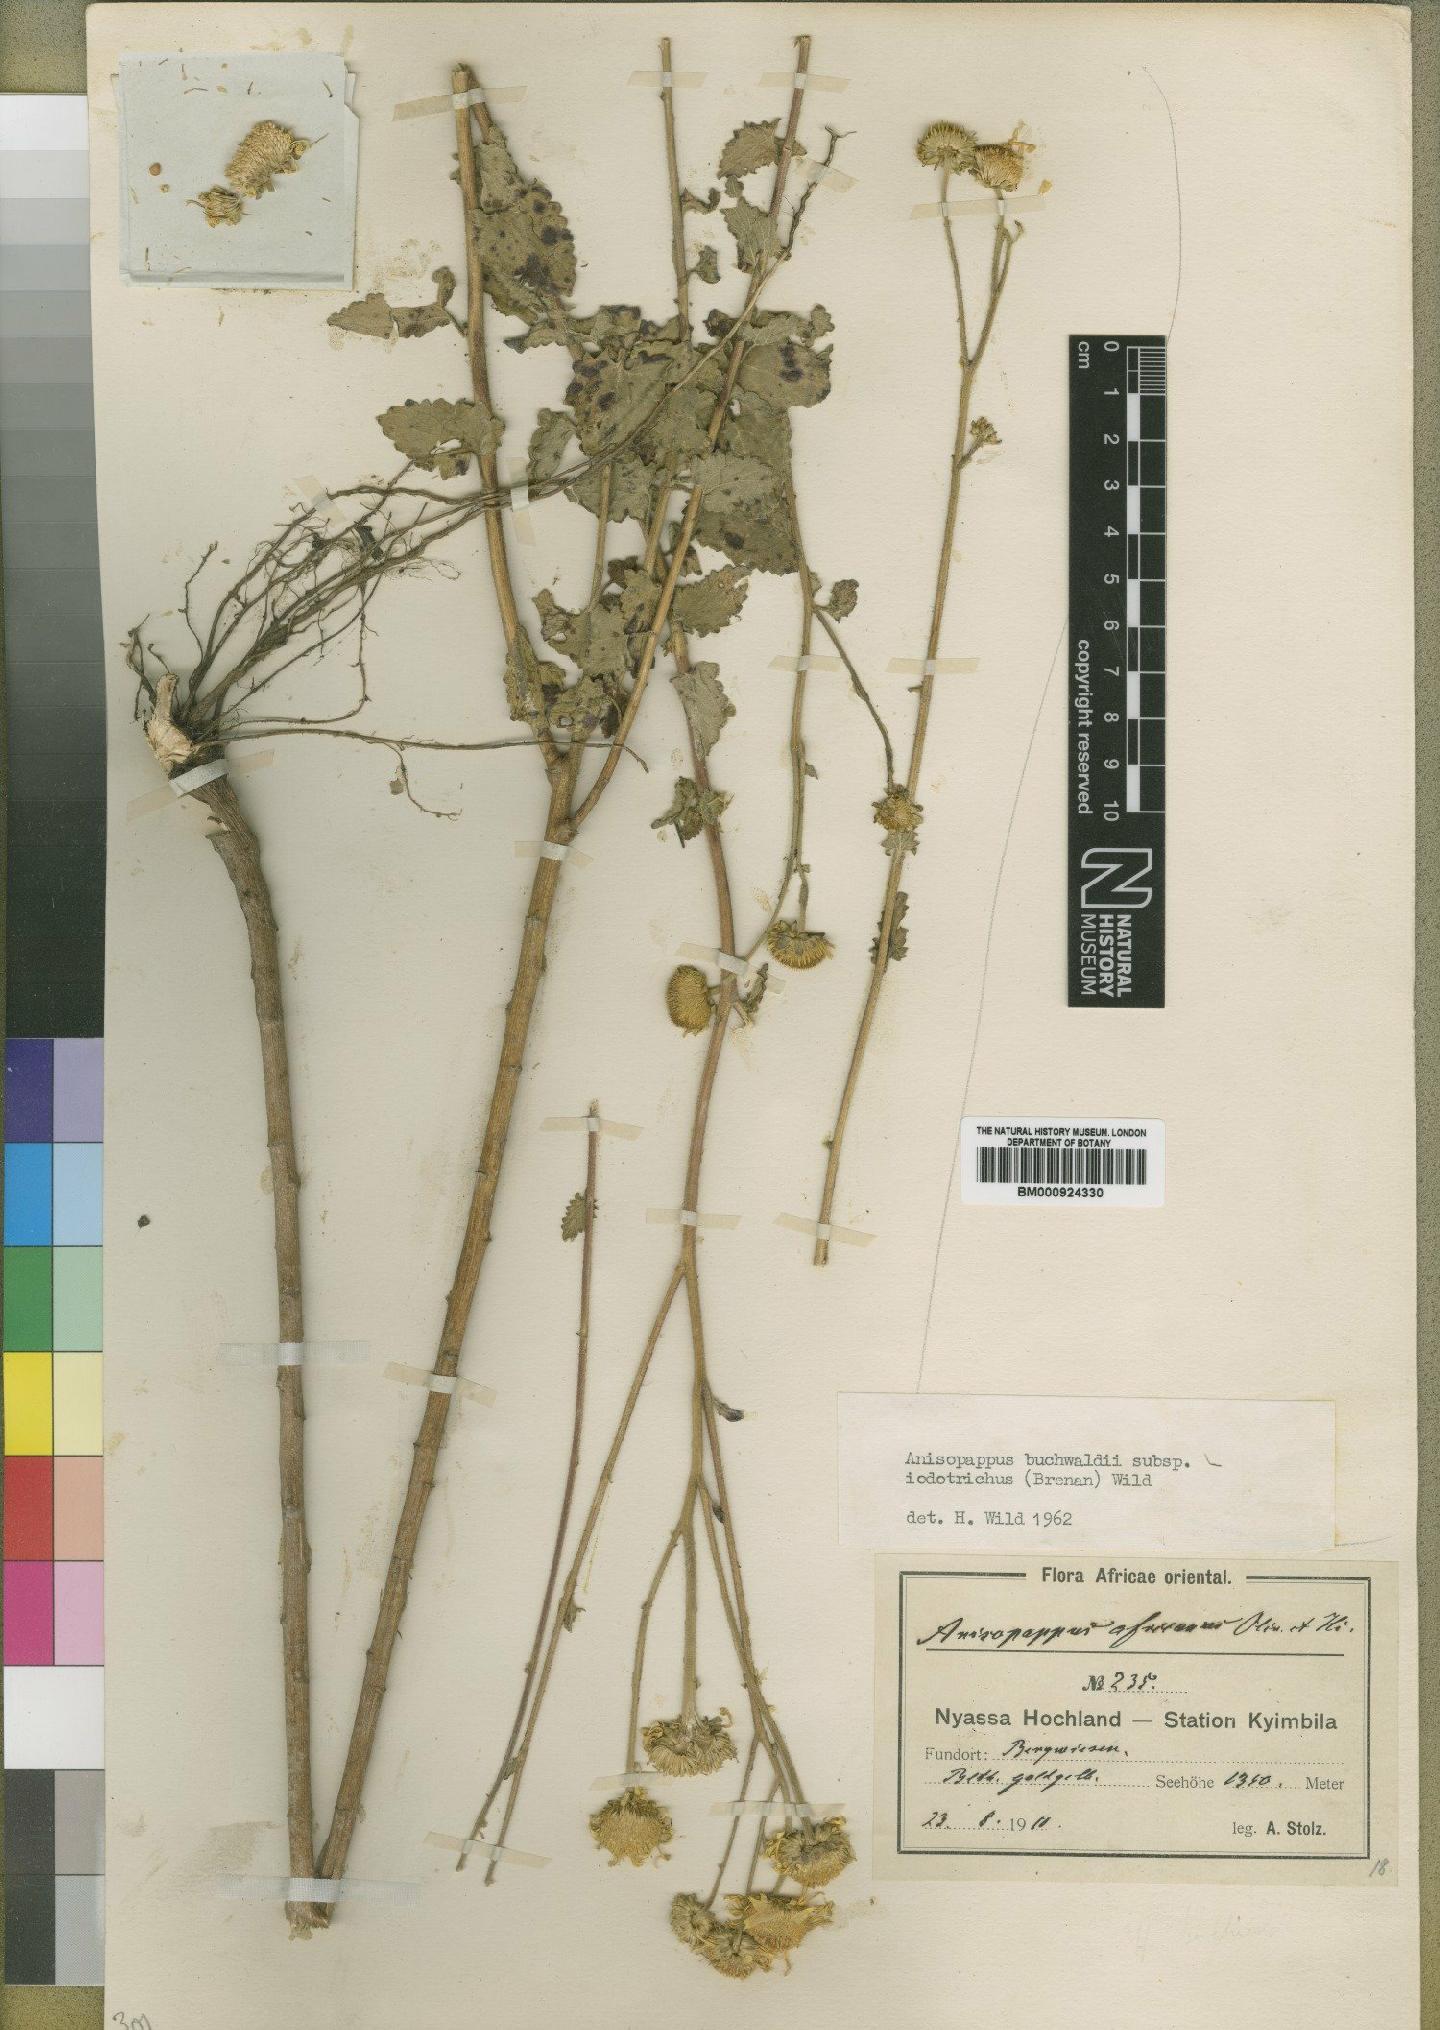 To NHMUK collection (Anisopappus buchwaldii subsp. iodotrichus (Brenan) Wild; Type; NHMUK:ecatalogue:4529358)